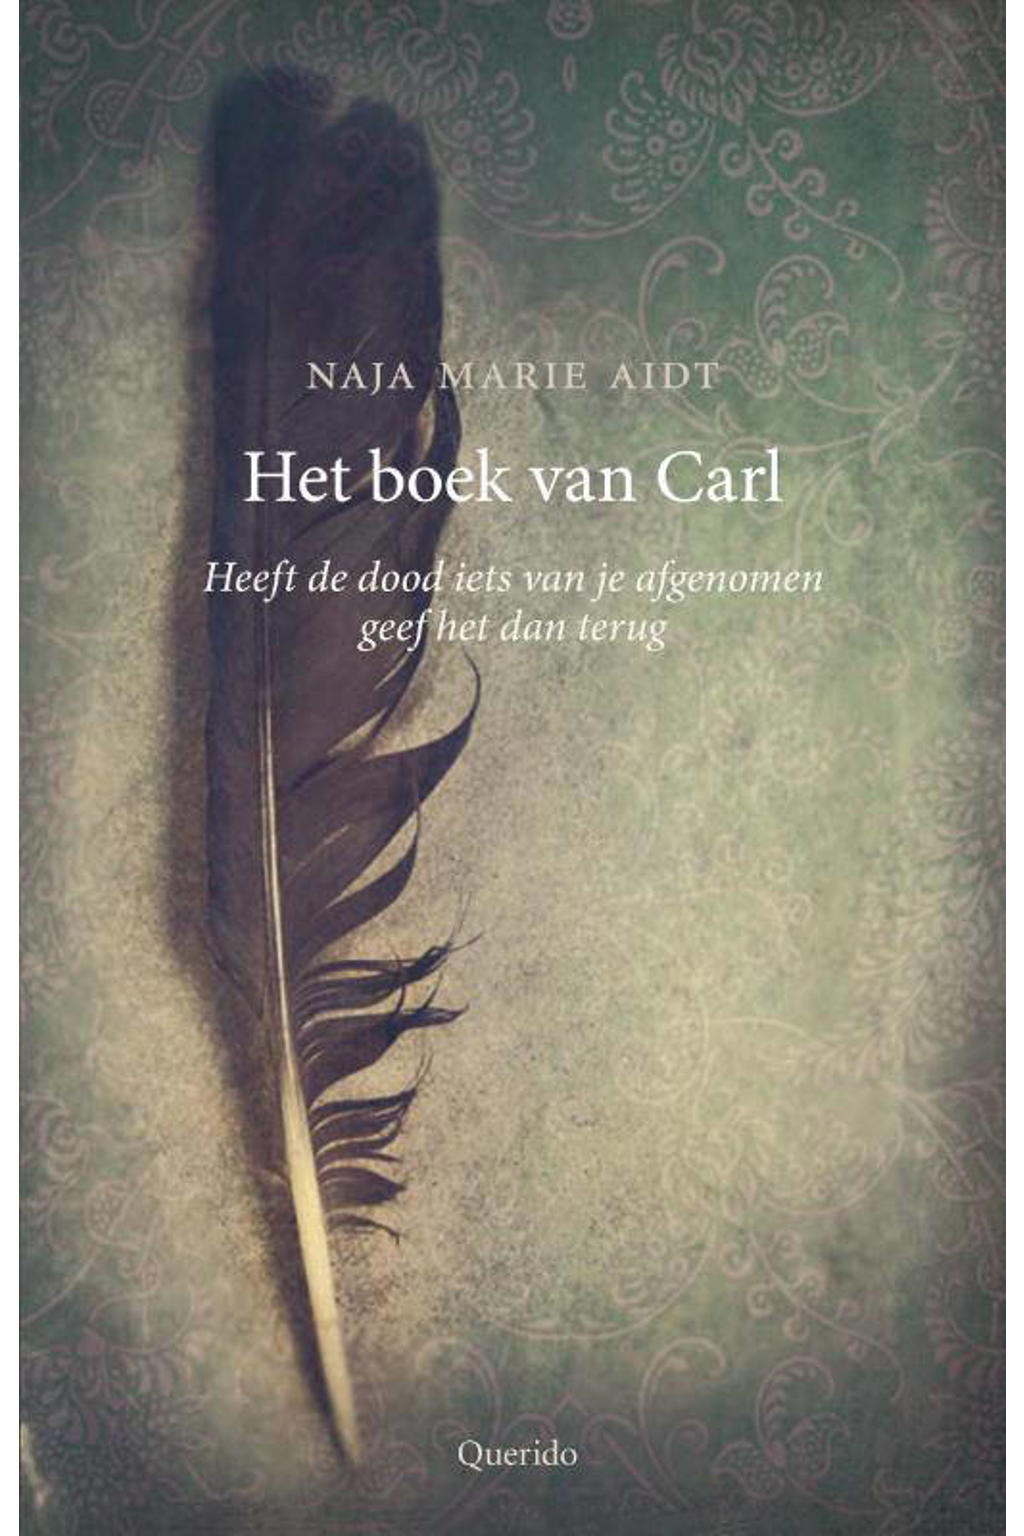 Het boek van Carl - Naja Marie Aidt